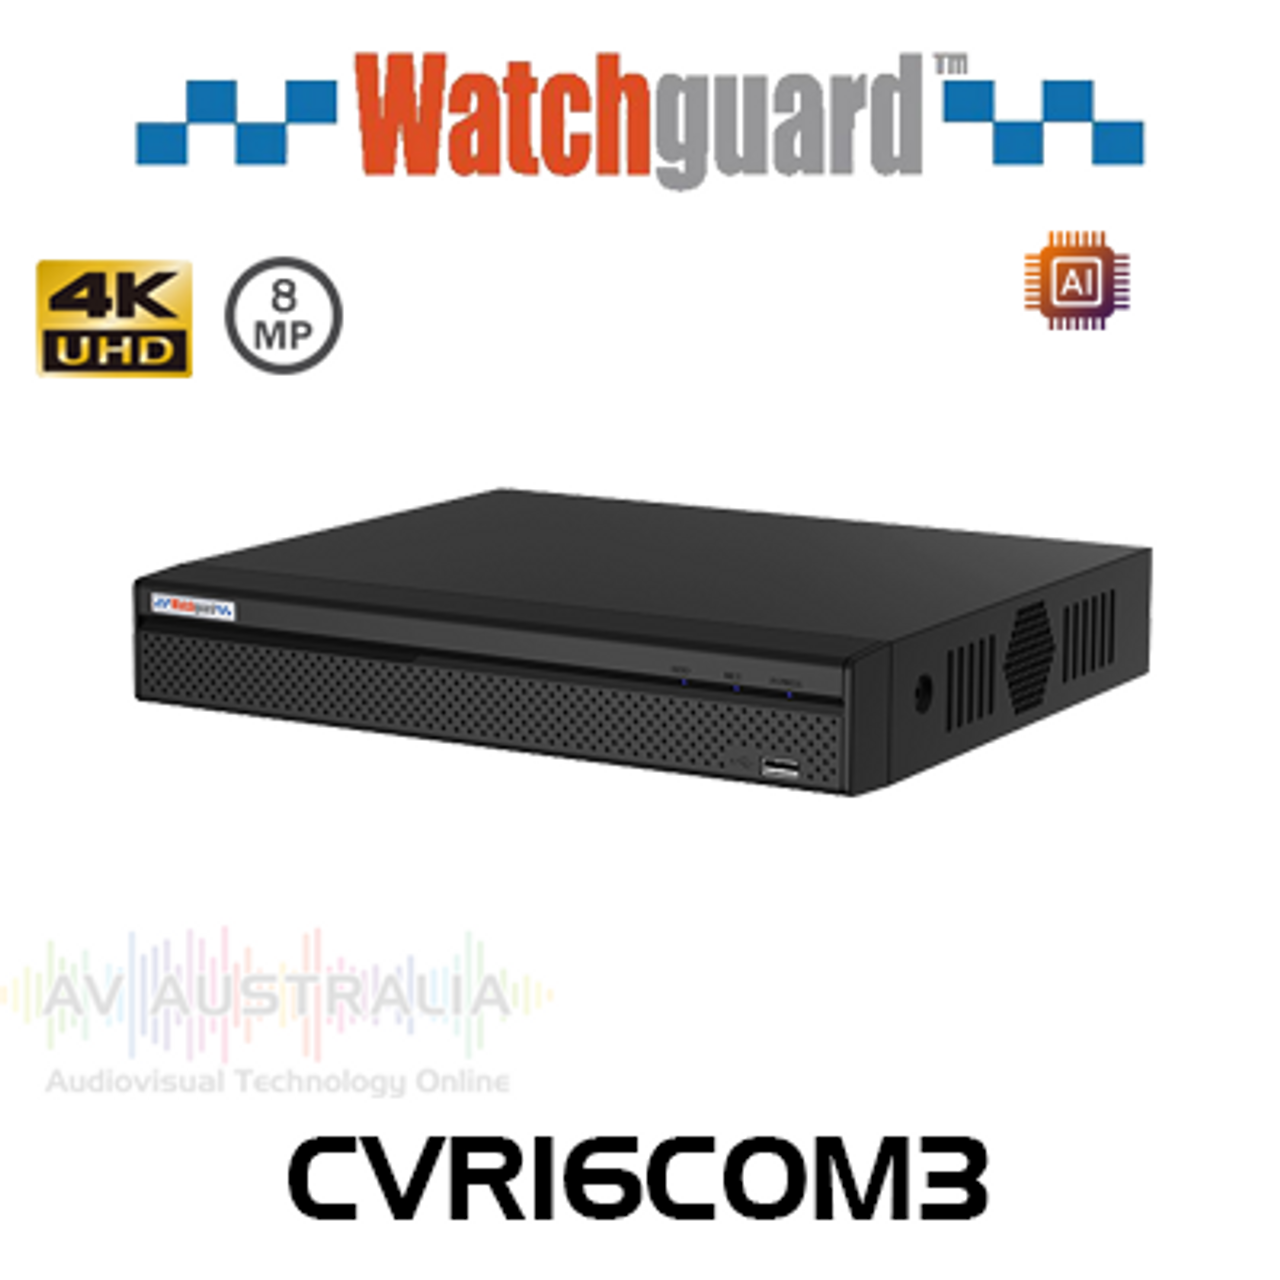 WatchGuard CVR16COM3 Compact 16-Ch 8MP HDCVI AI Digital Video Recorder